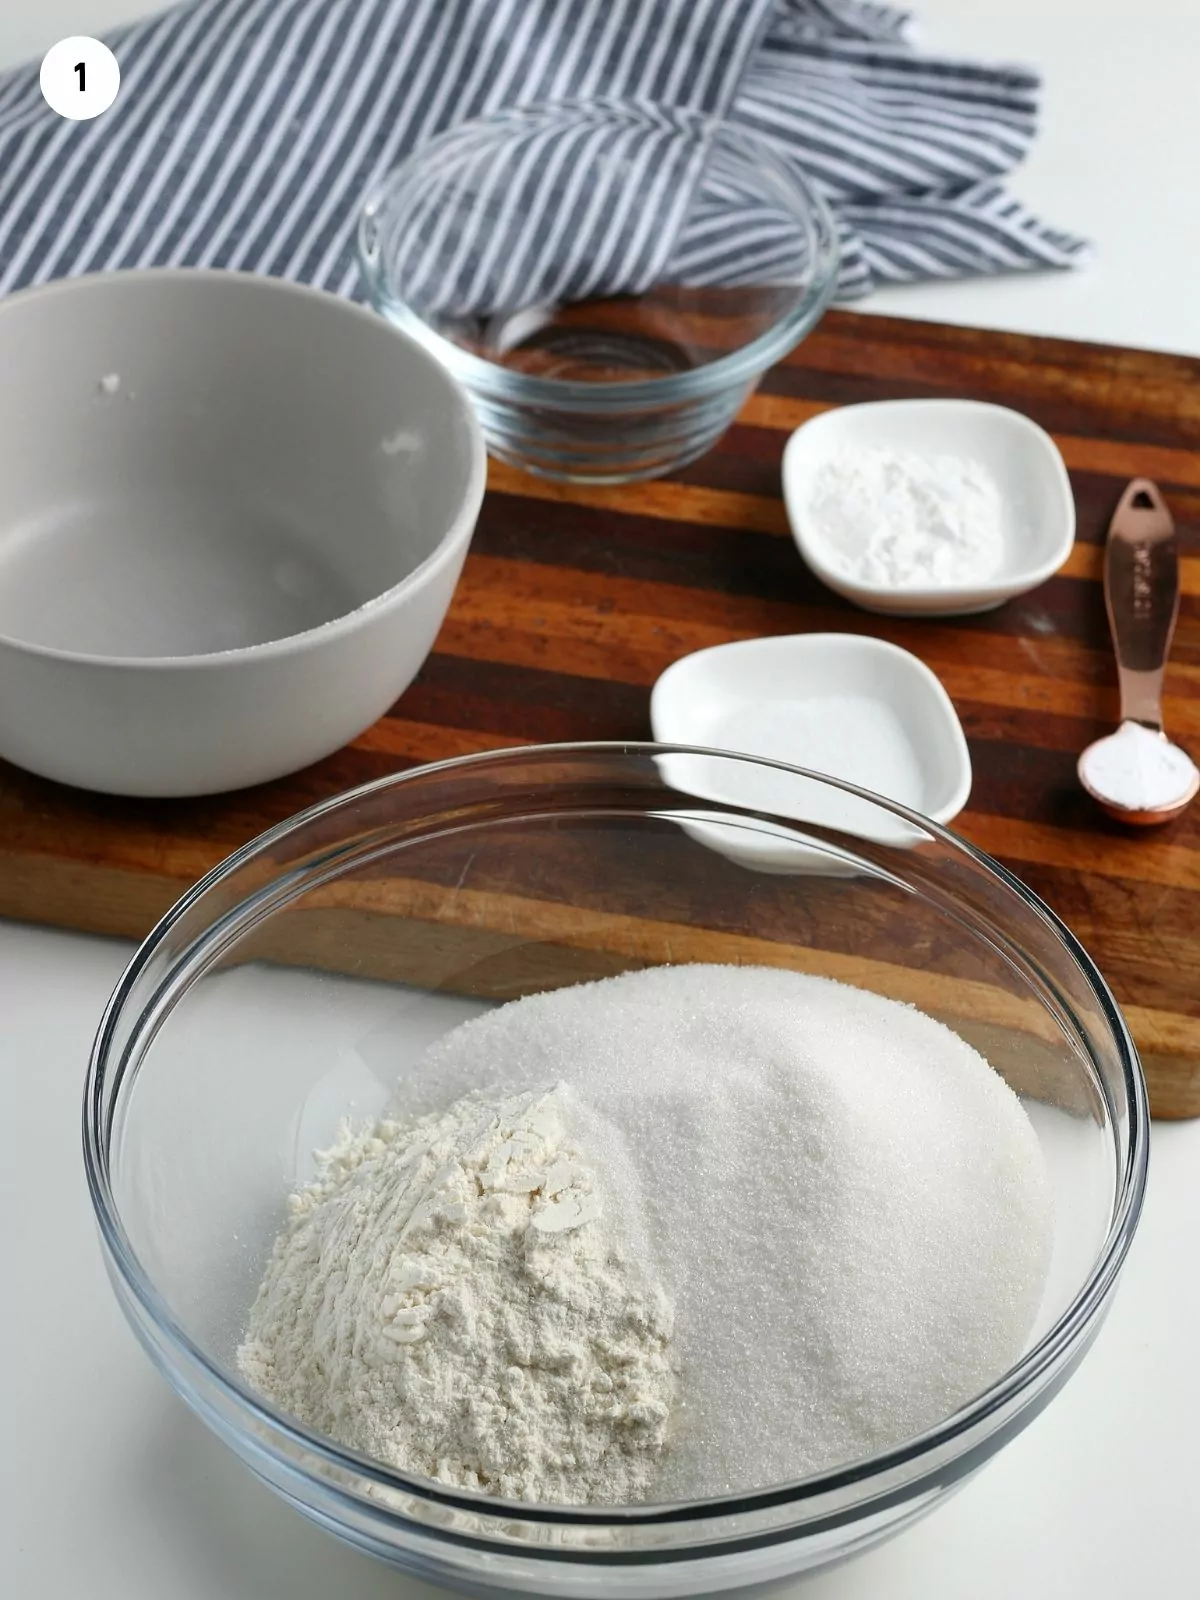 Add flour and sugar in bowl.